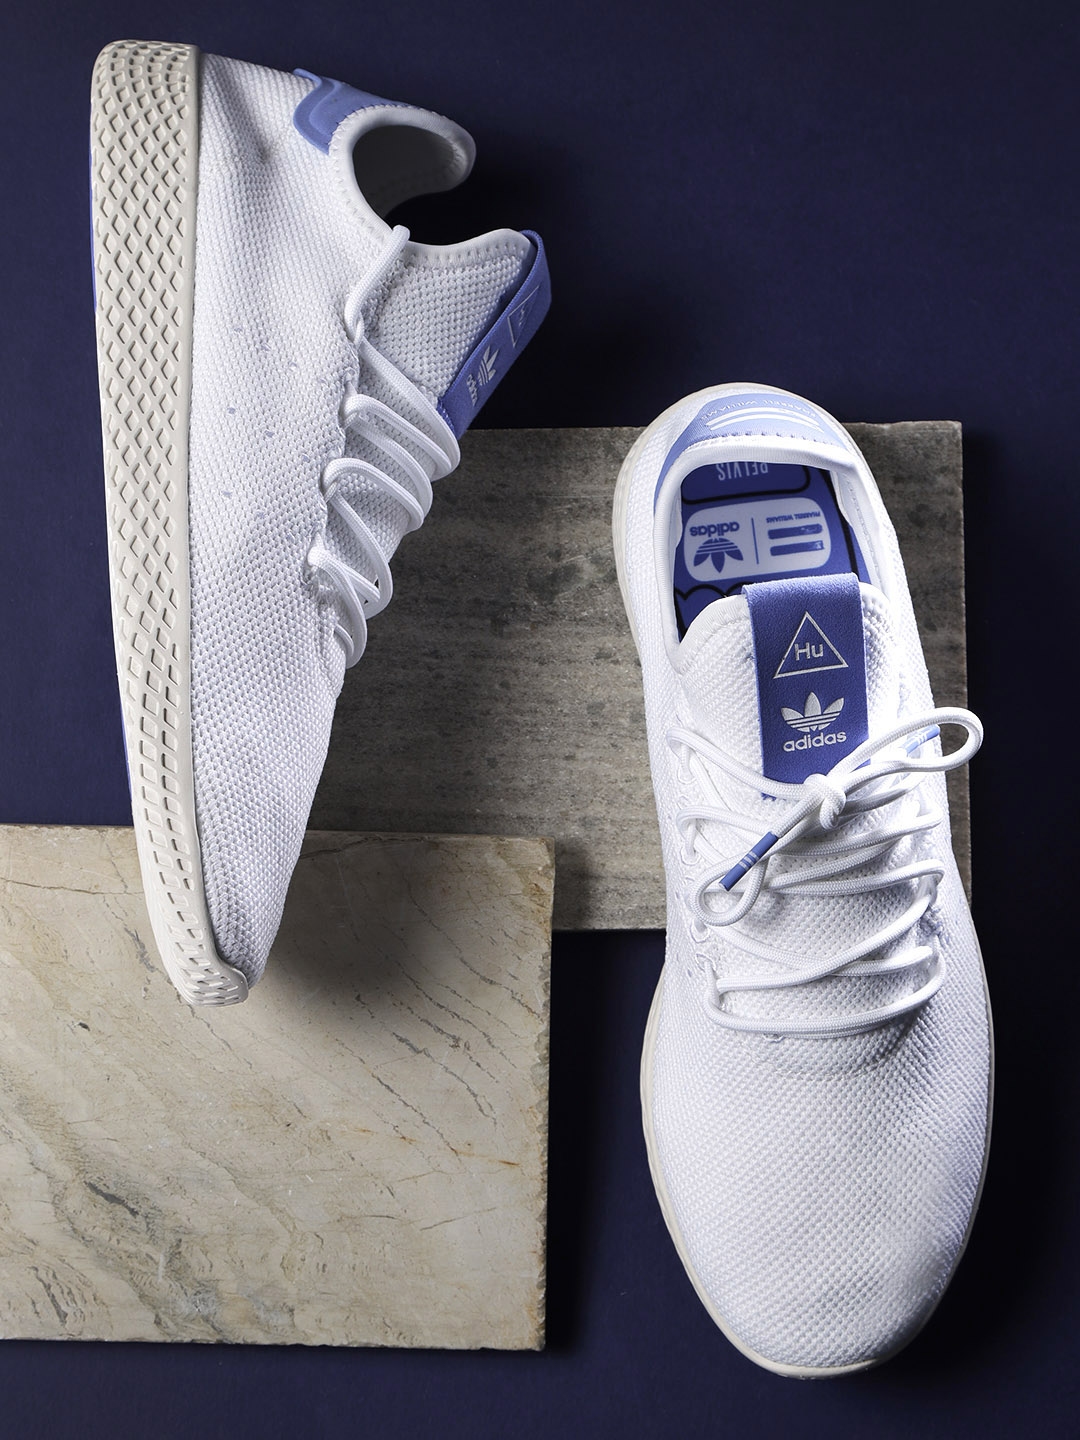 Adidas Originals Men's PW Tennis Hu Shoes